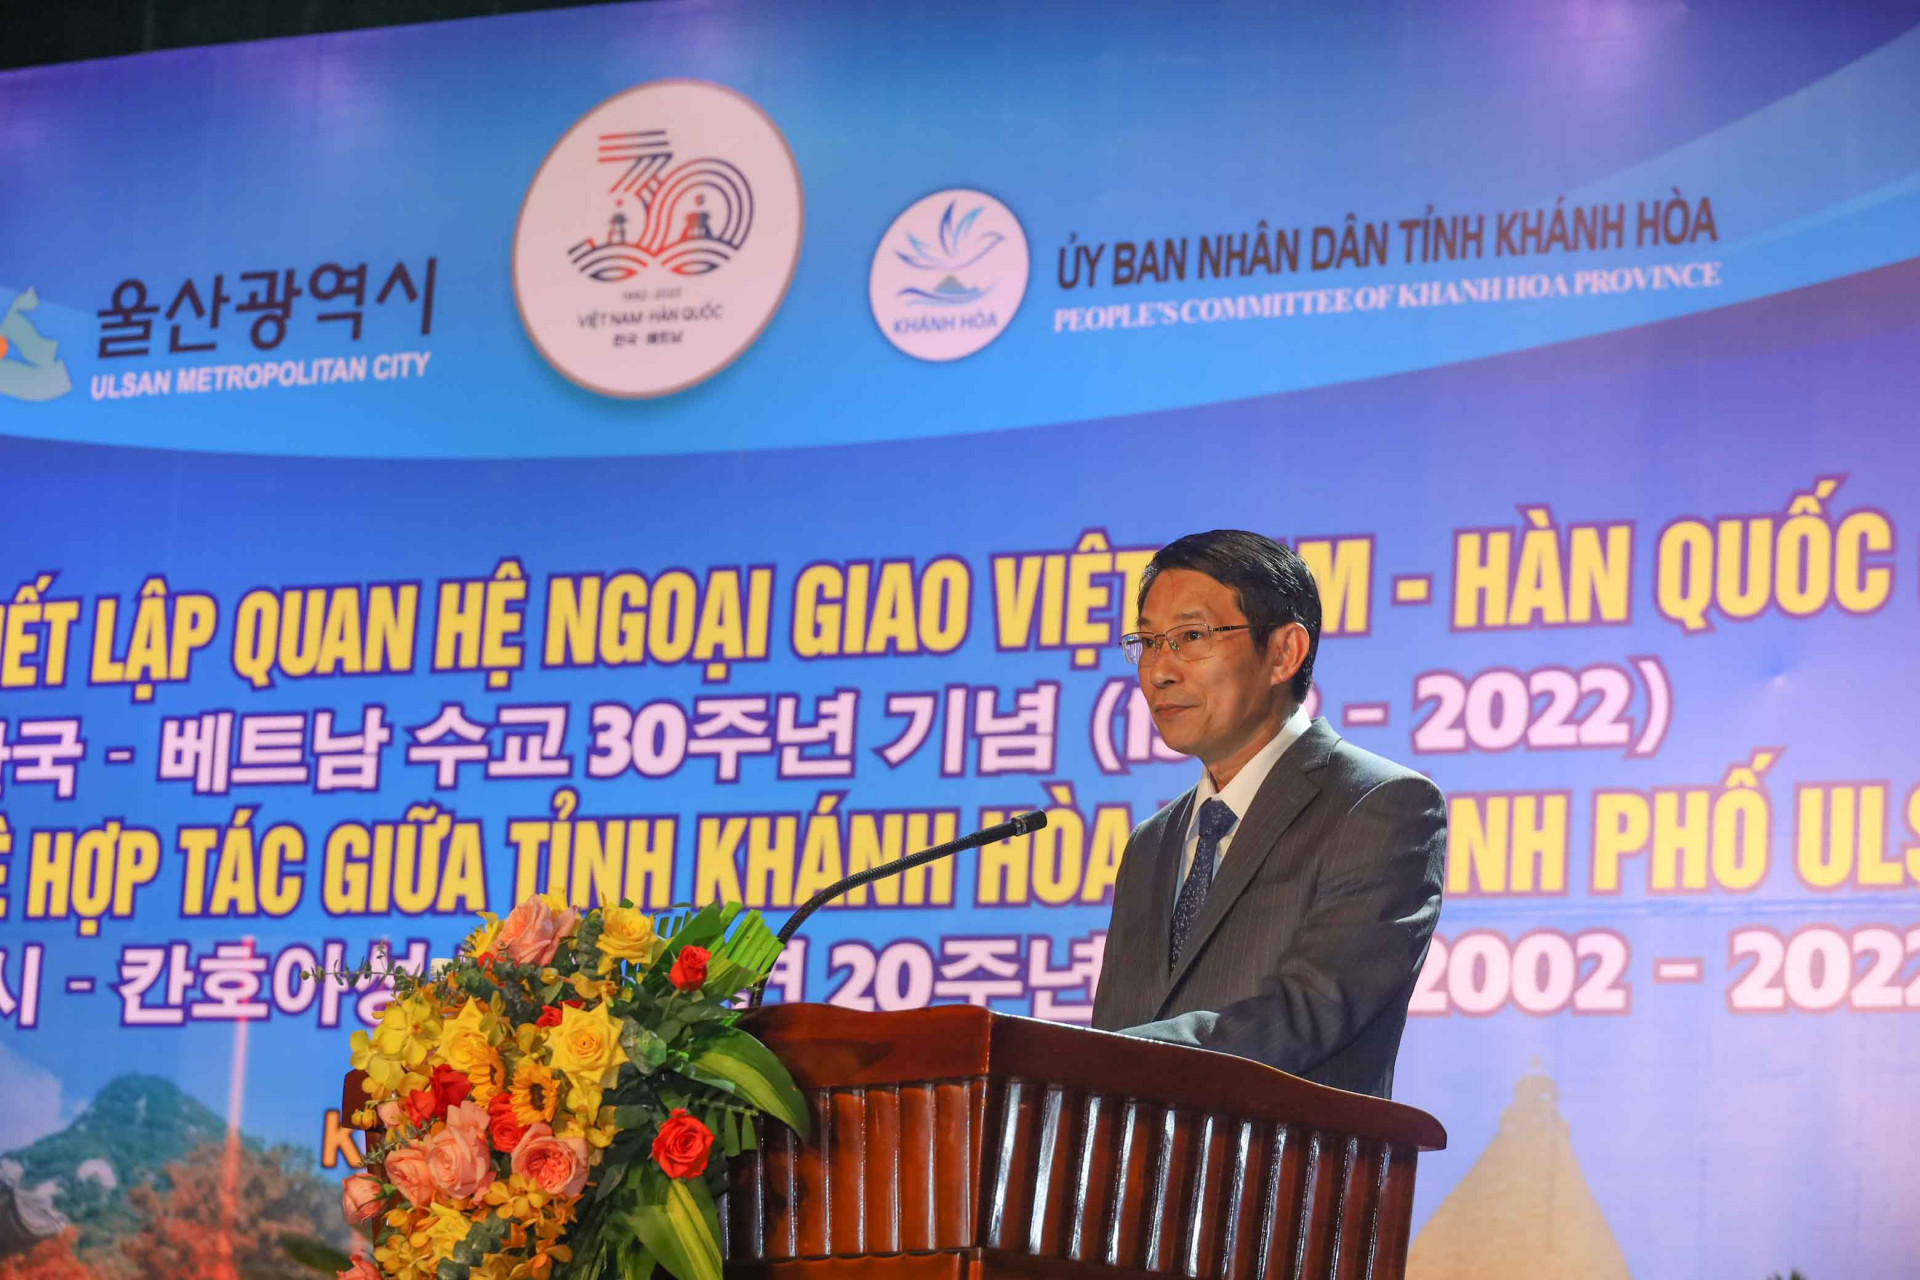 Dinh Van Thieu delivering speech at the program